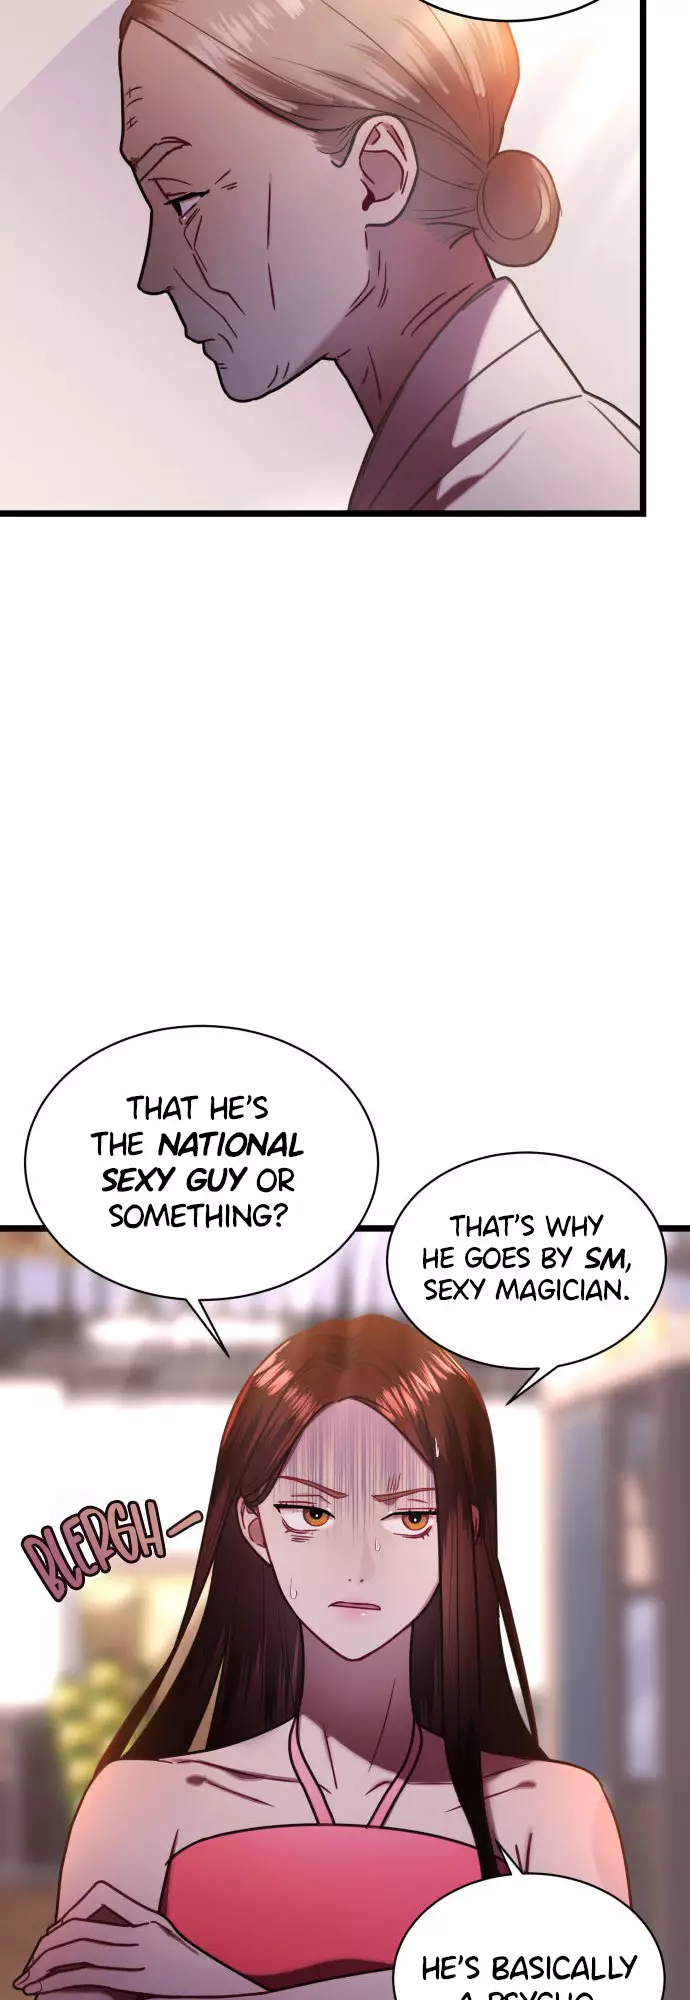 Maseknam - A Sexy Magician - 9 page 17-99366950